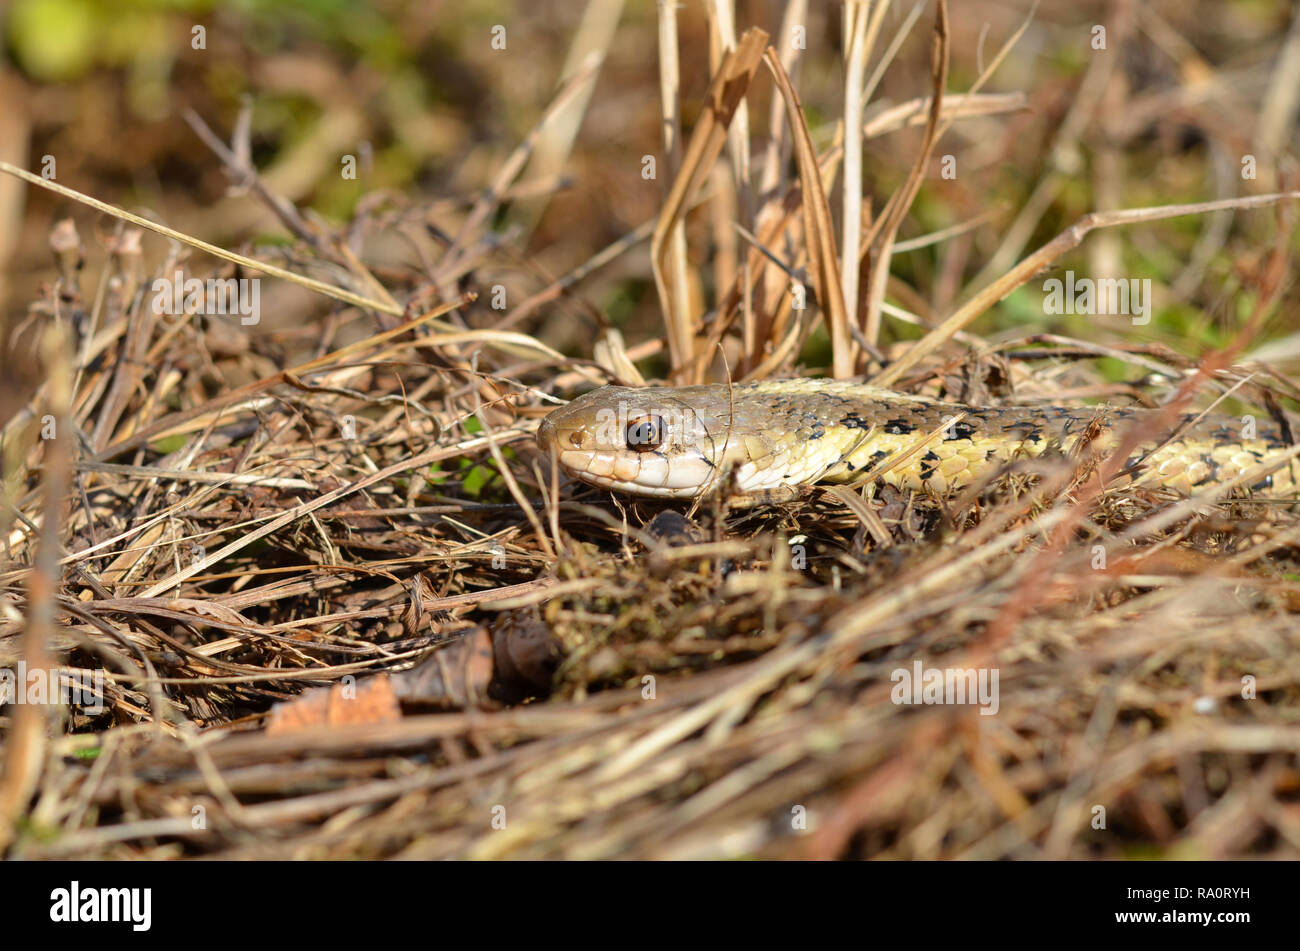 Garter Snake Close Up Stock Photo